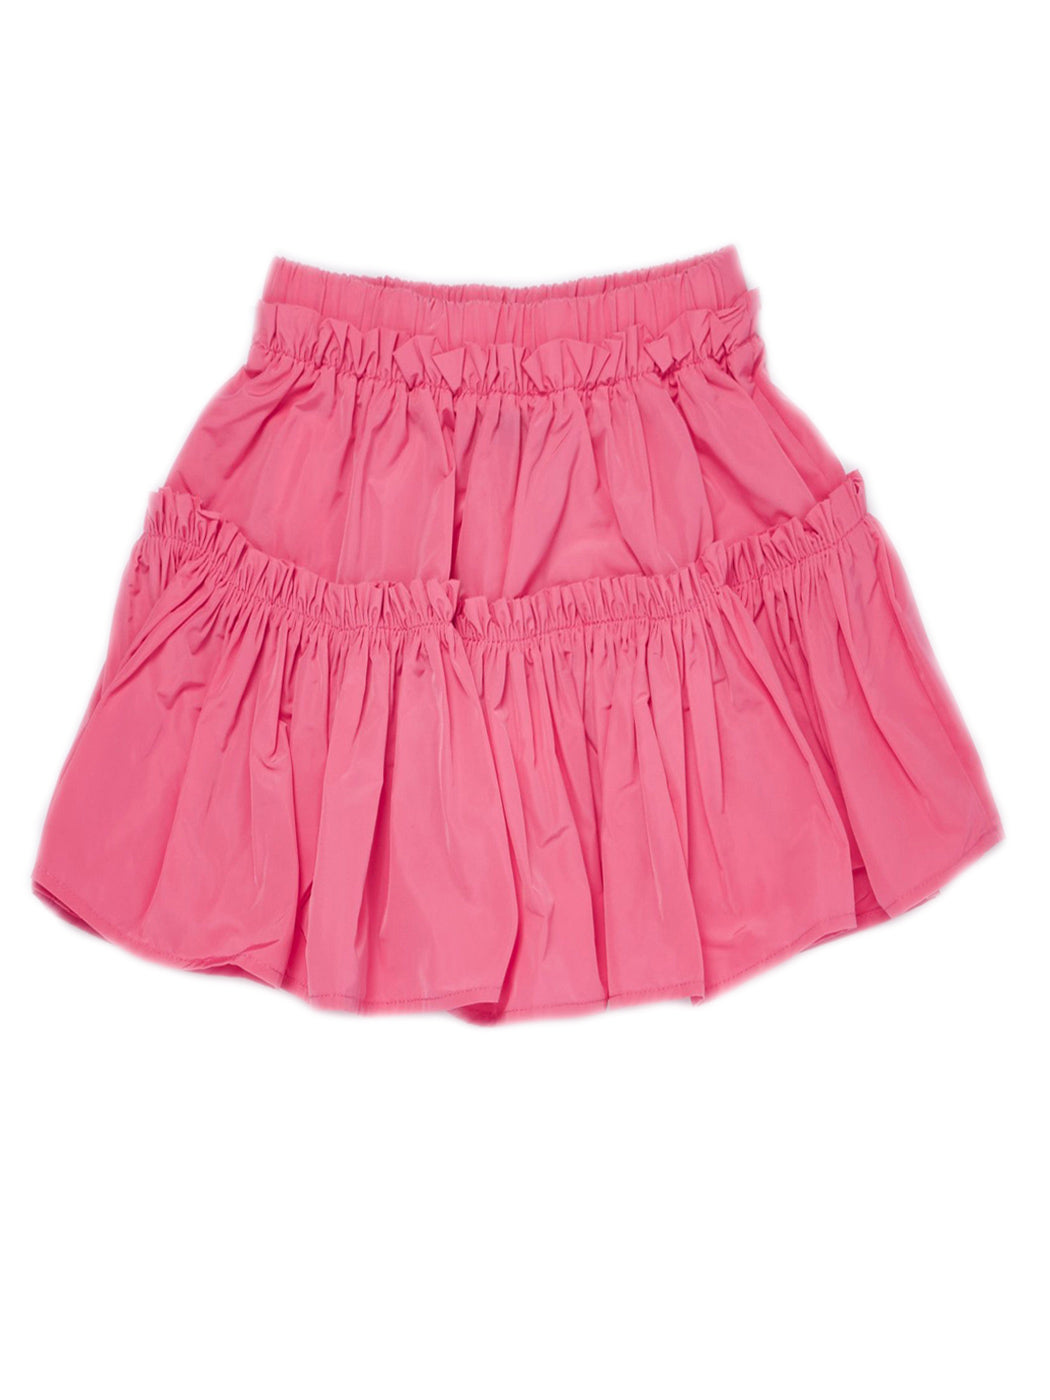 Twinset Girl's taffeta skirt with ruffles